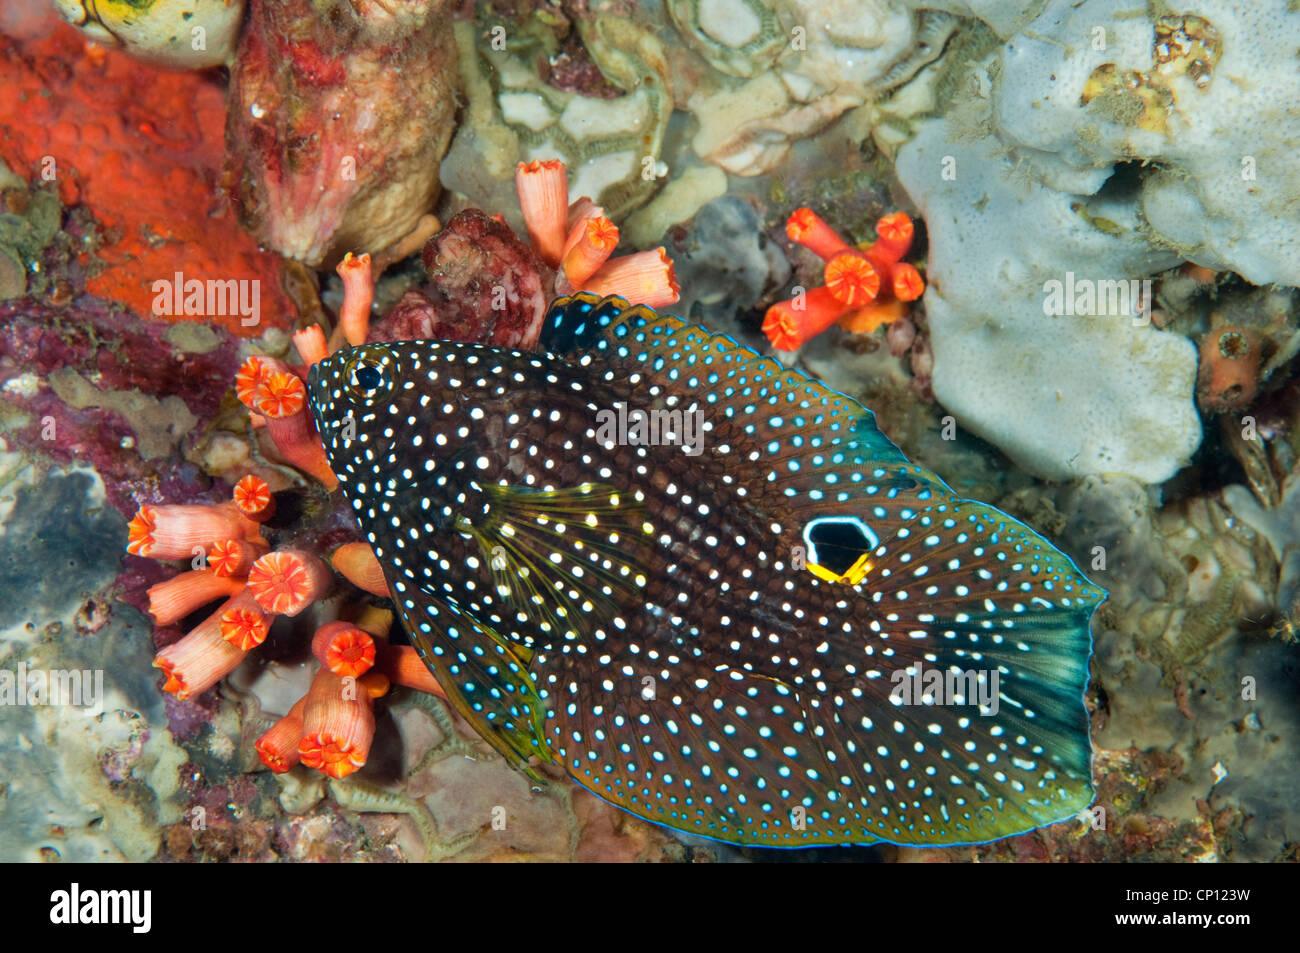 Comet fish, Calloplesiops altivelis, Sulawesi Indonesia Stock Photo